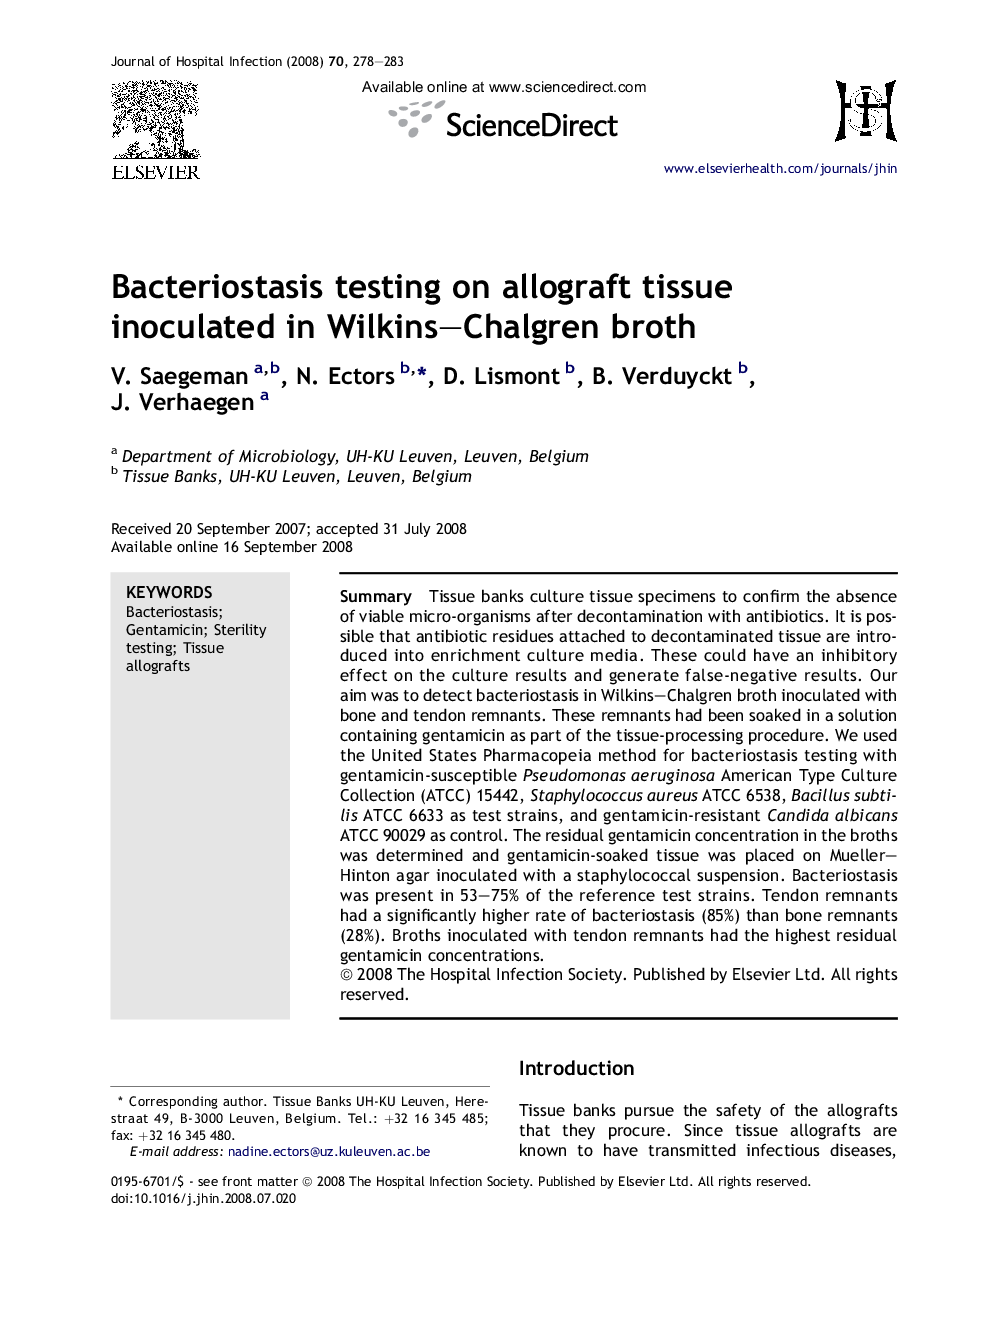 Bacteriostasis testing on allograft tissue inoculated in Wilkins–Chalgren broth